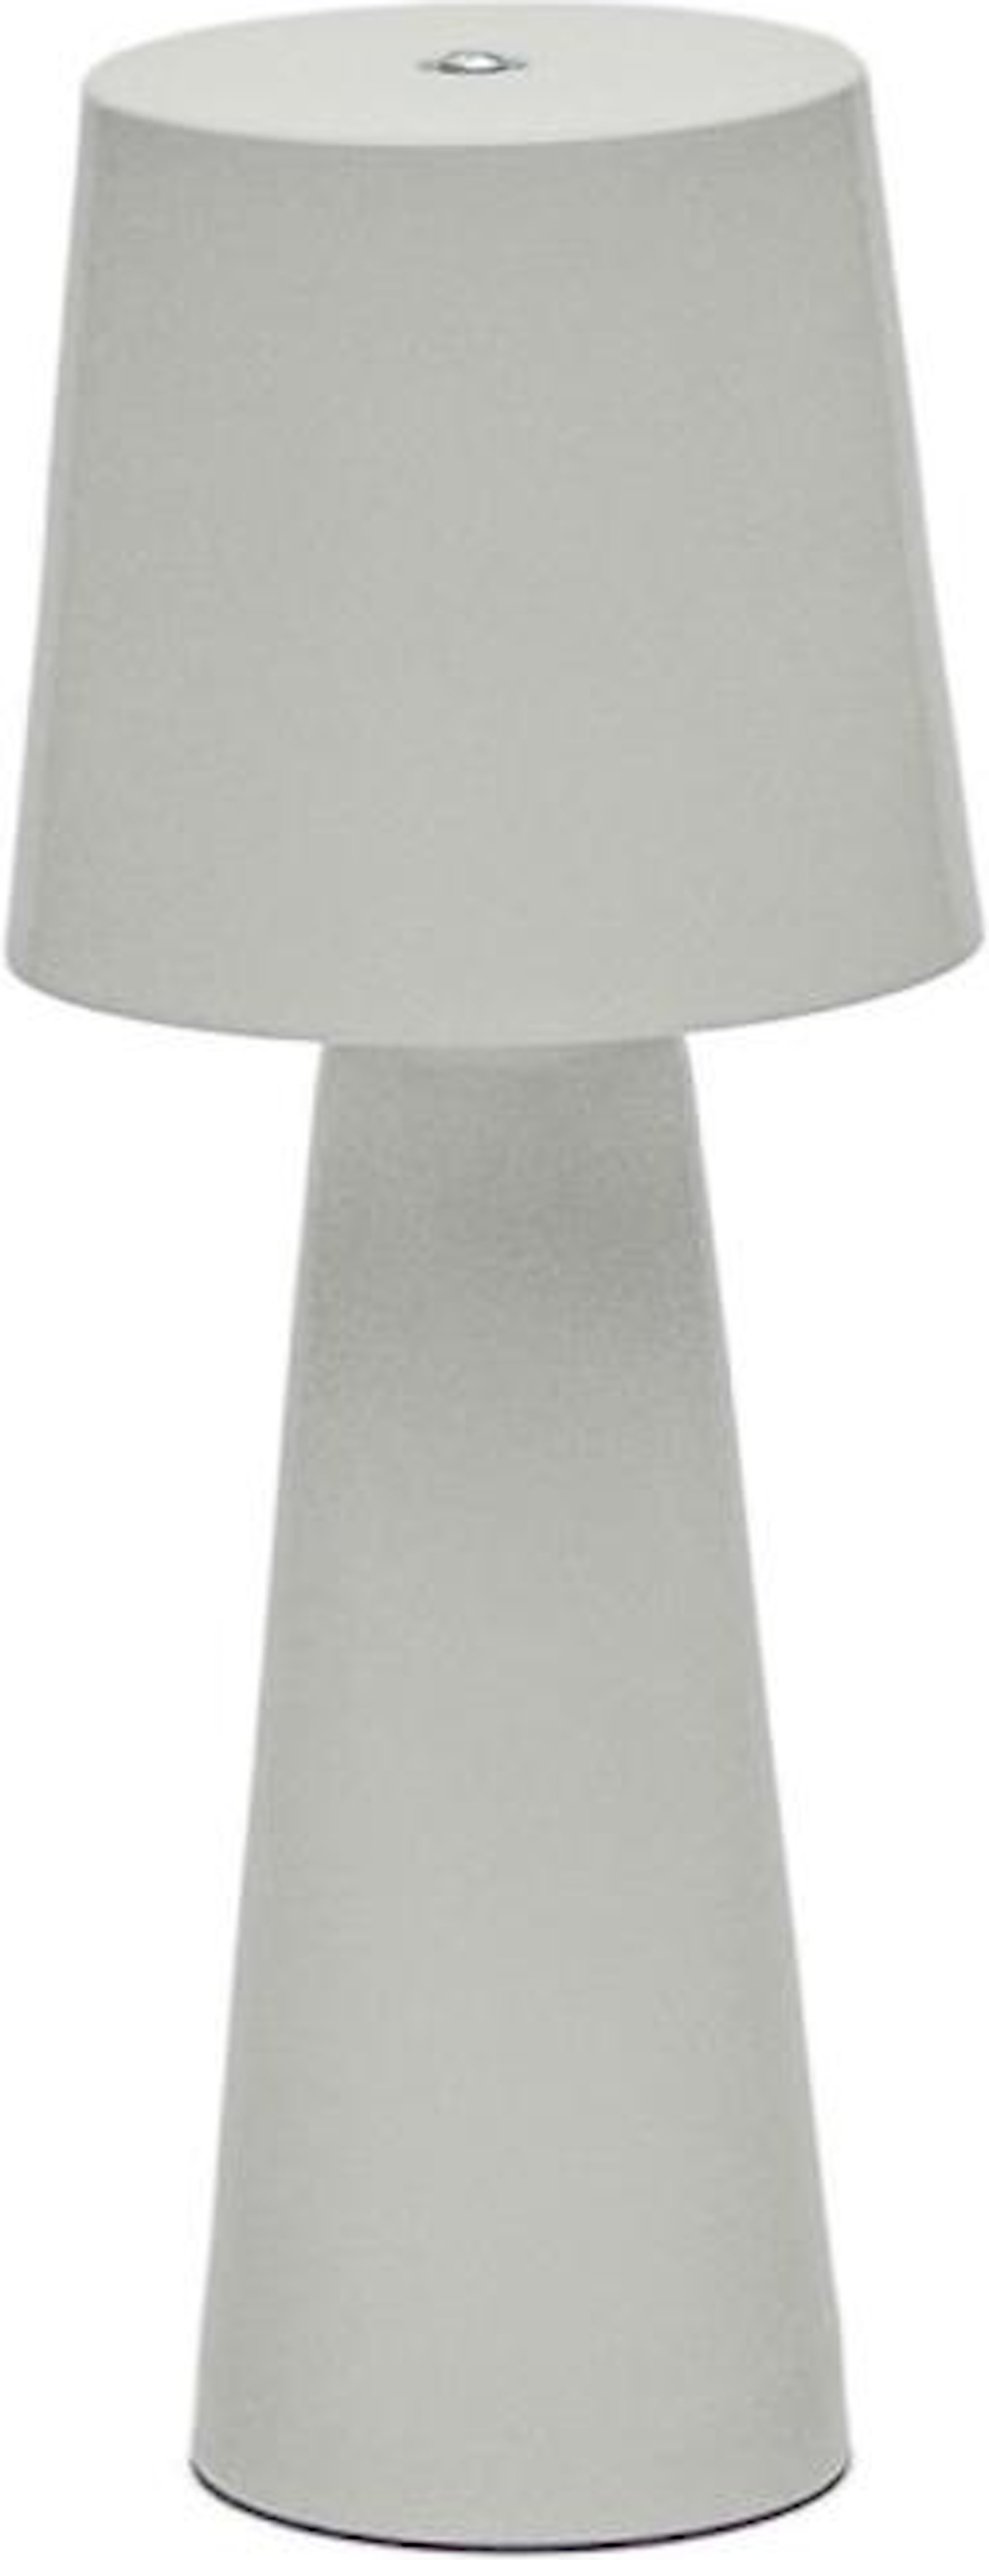 Arenys, Bordlampe, moderne, nordisk, metal by Laforma (H: 25 cm. x B: 10 cm. x L: 10 cm., Grå)